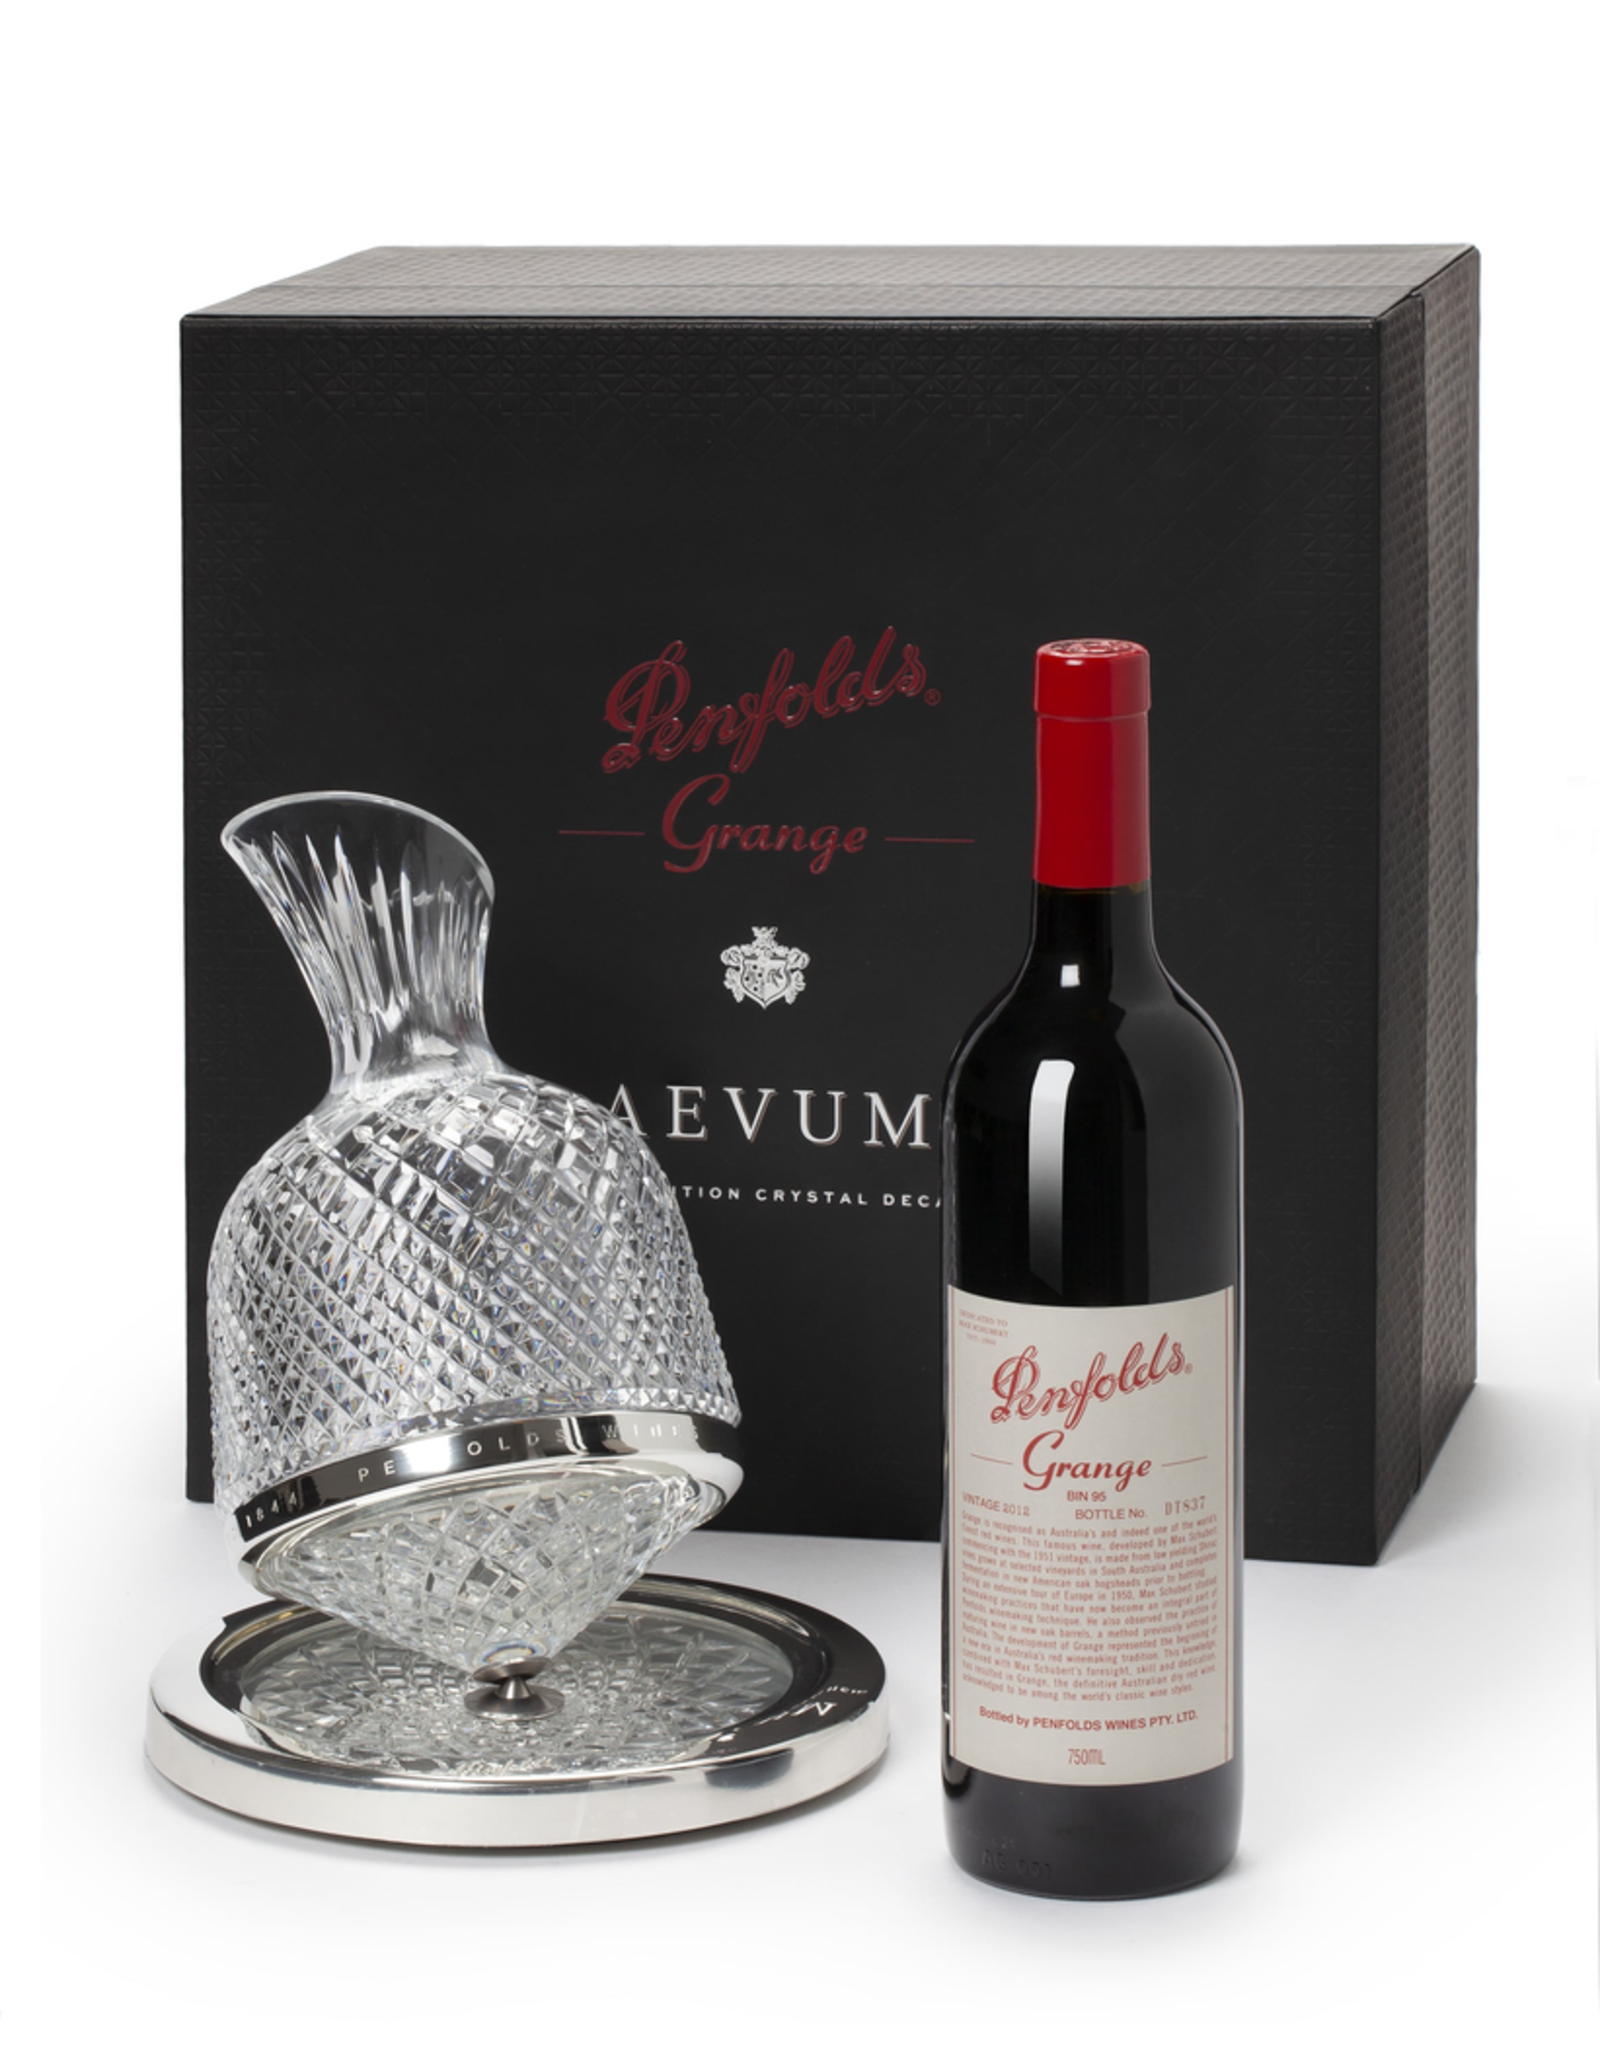 Red Wine 2012, Penfolds Grange Avevum Crystal Decanter Gift Package, Shiraz, Multi-regional Blend, Southern Australia, Australia, 14.5% Alc, CT95